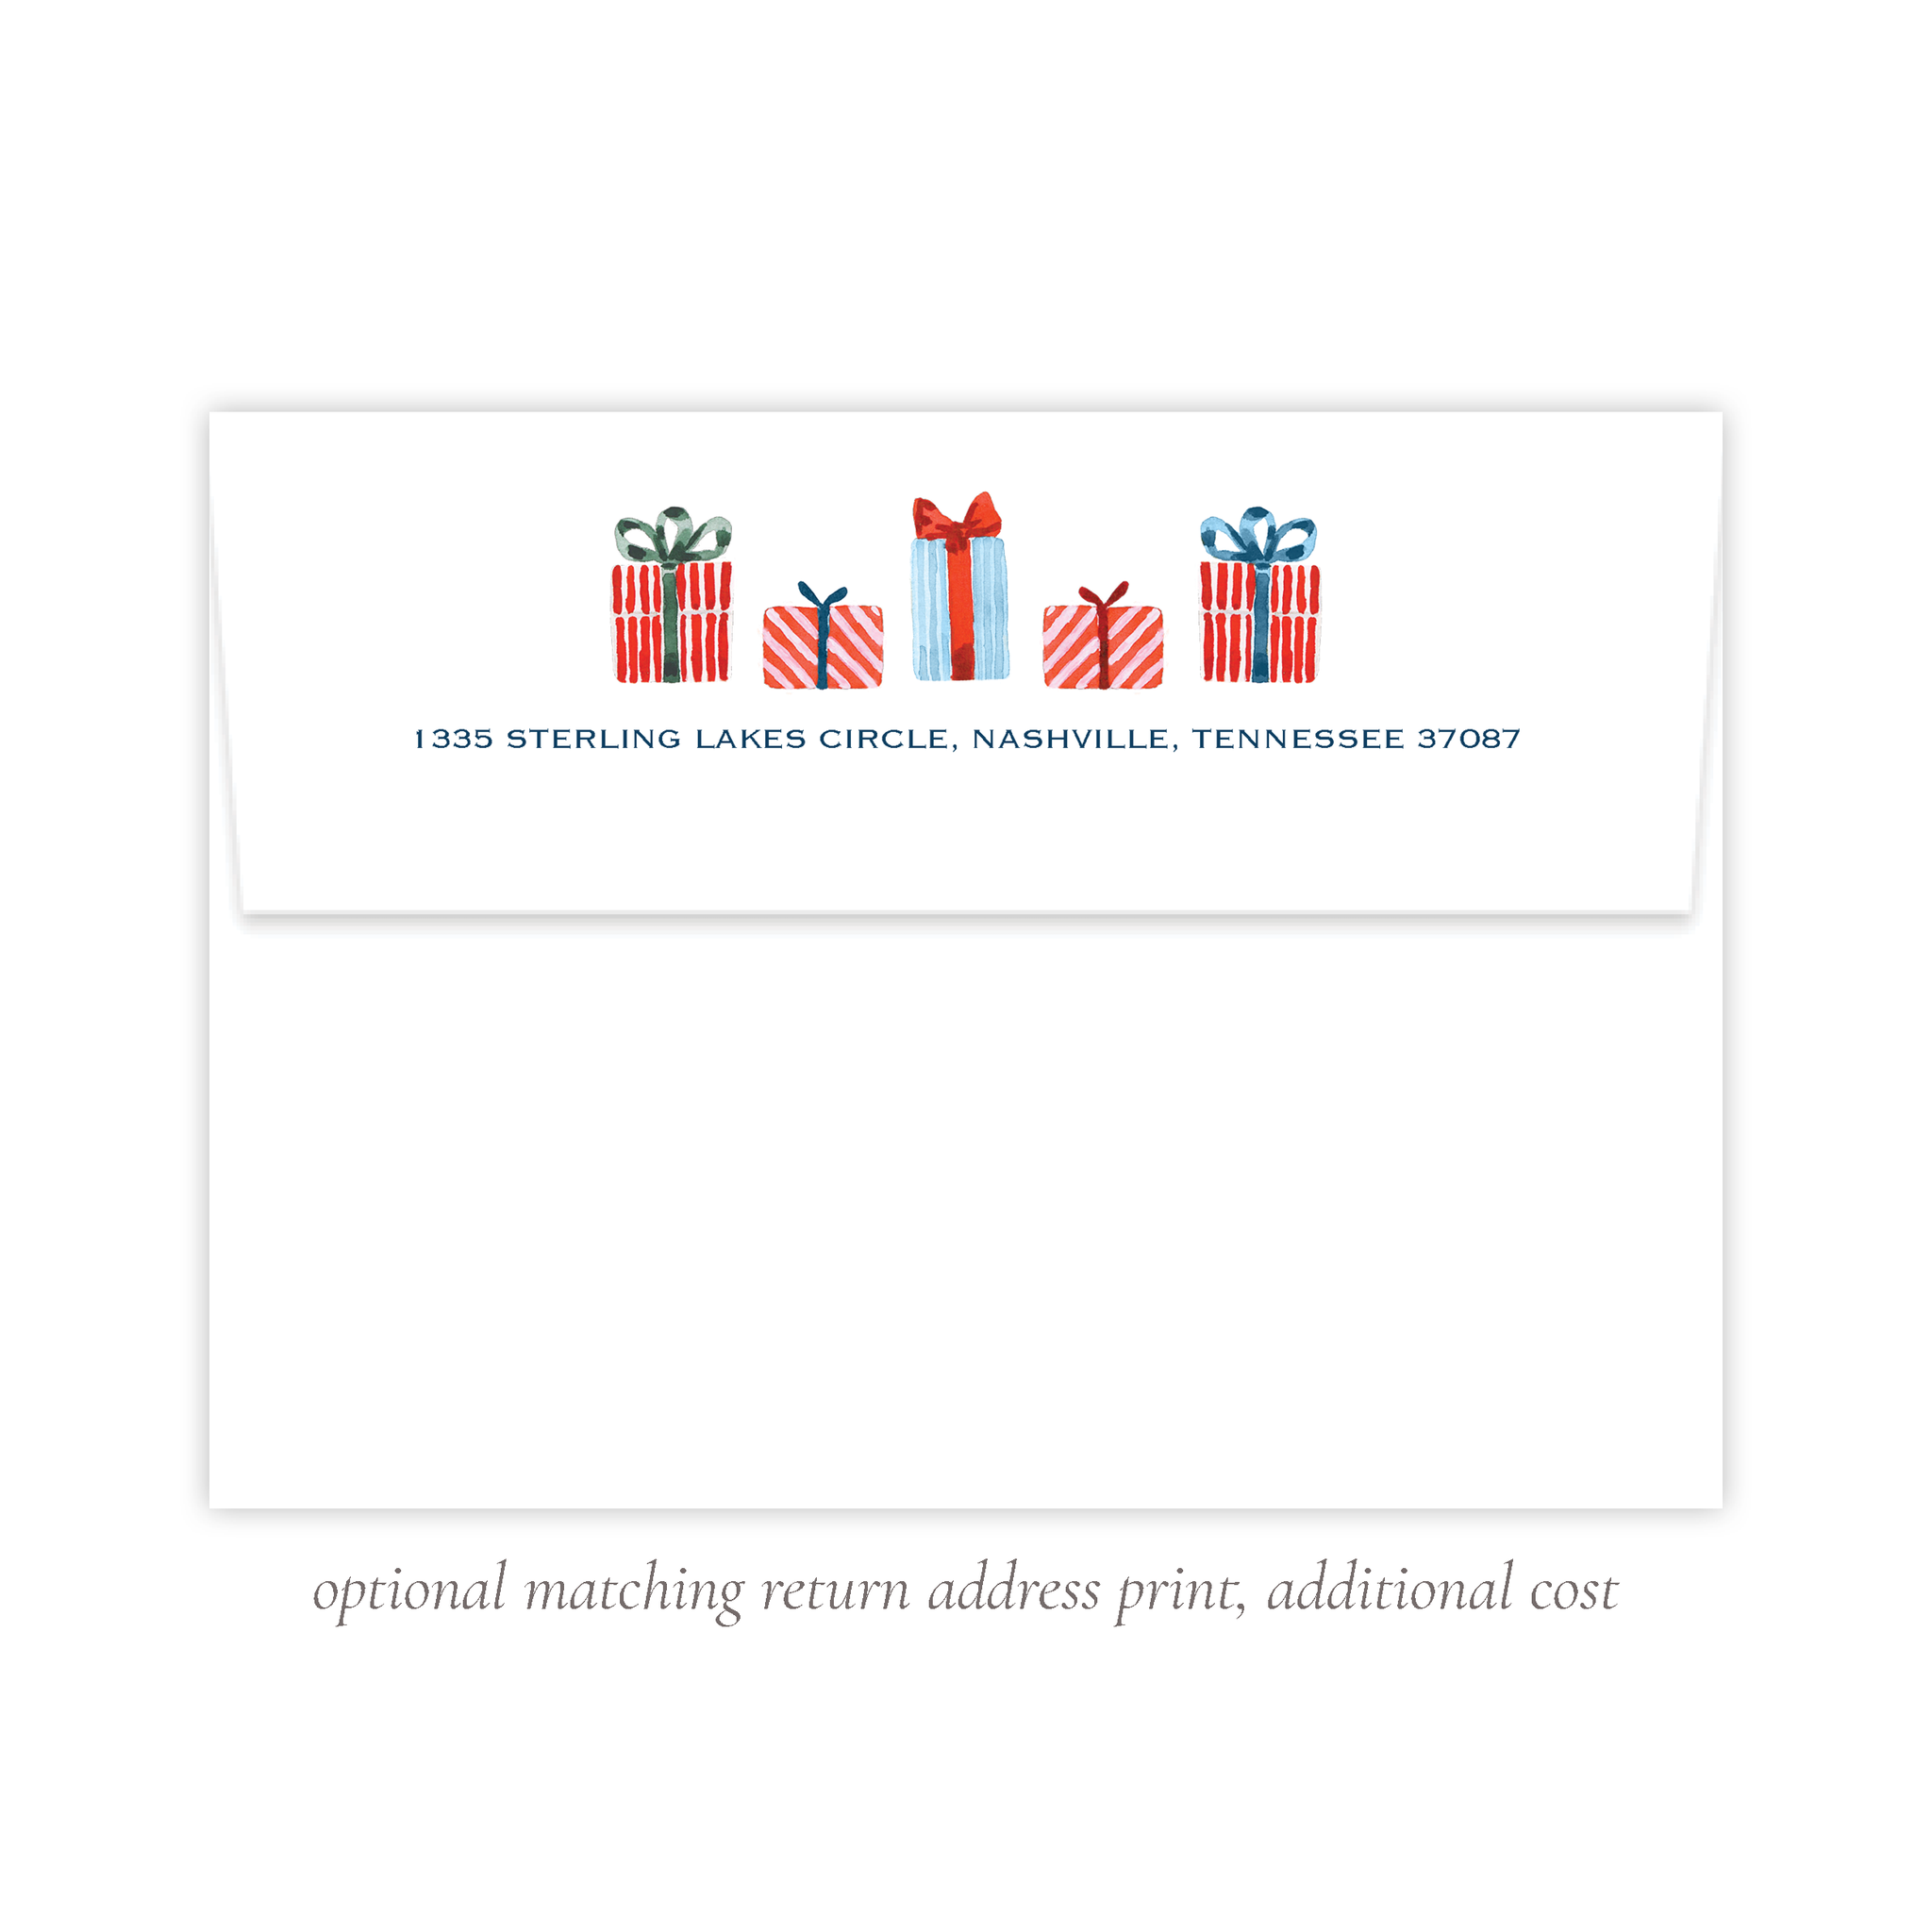 Giving with Cheer Christmas Return Address Print